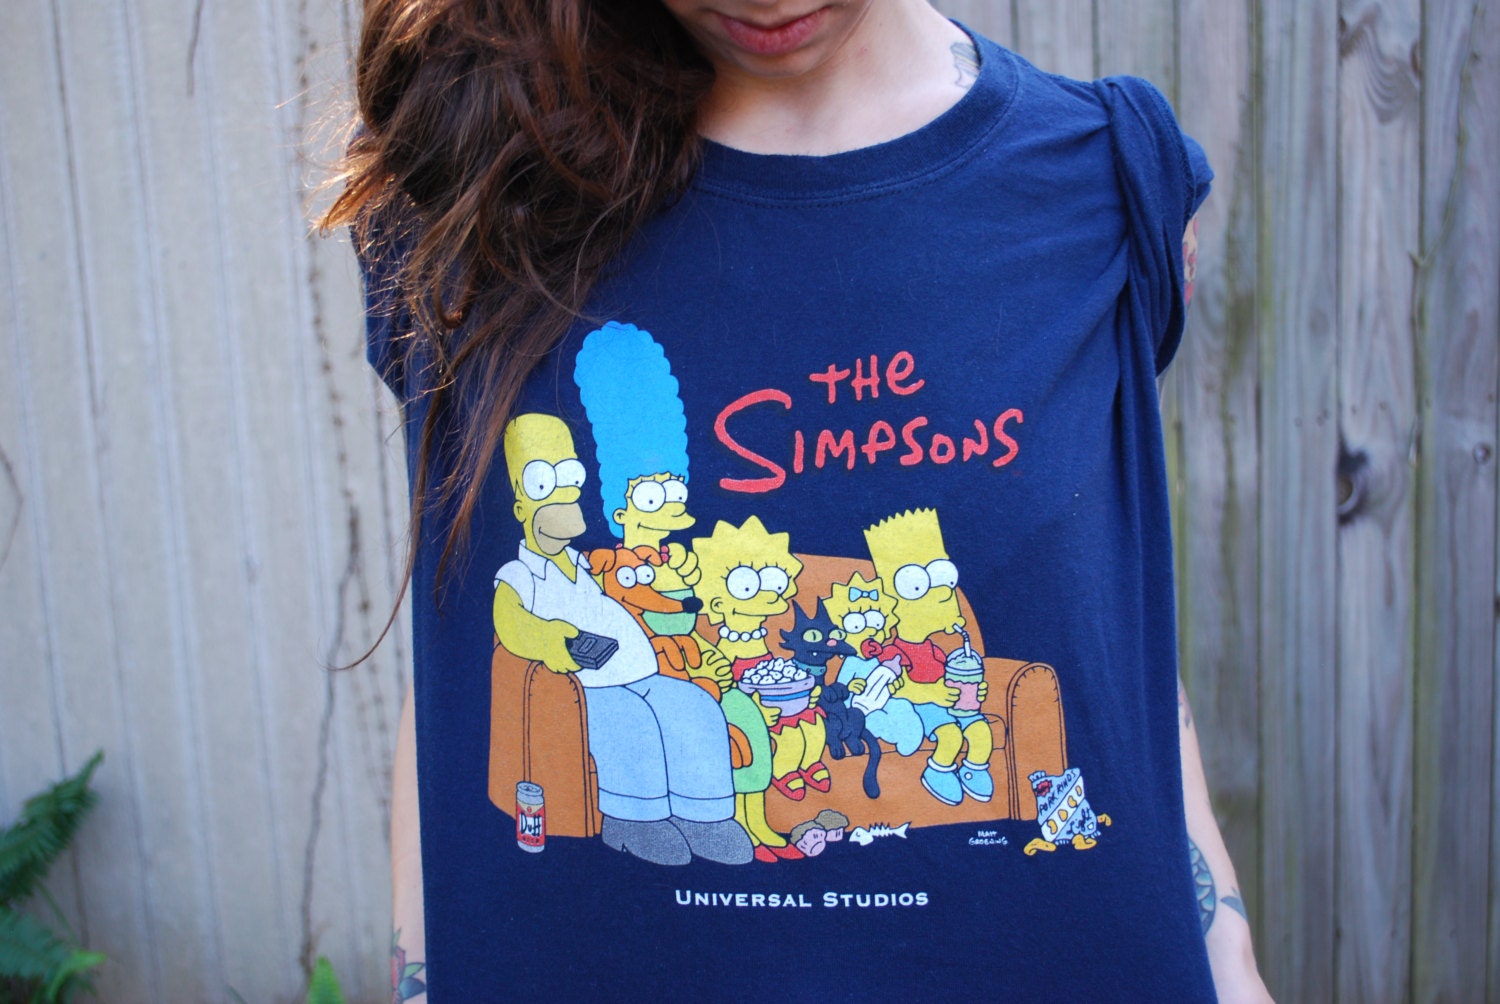 Vintage // Grunge 90's Simpsons T Shirt // Universal Studios Size M // Cartoon Family Values